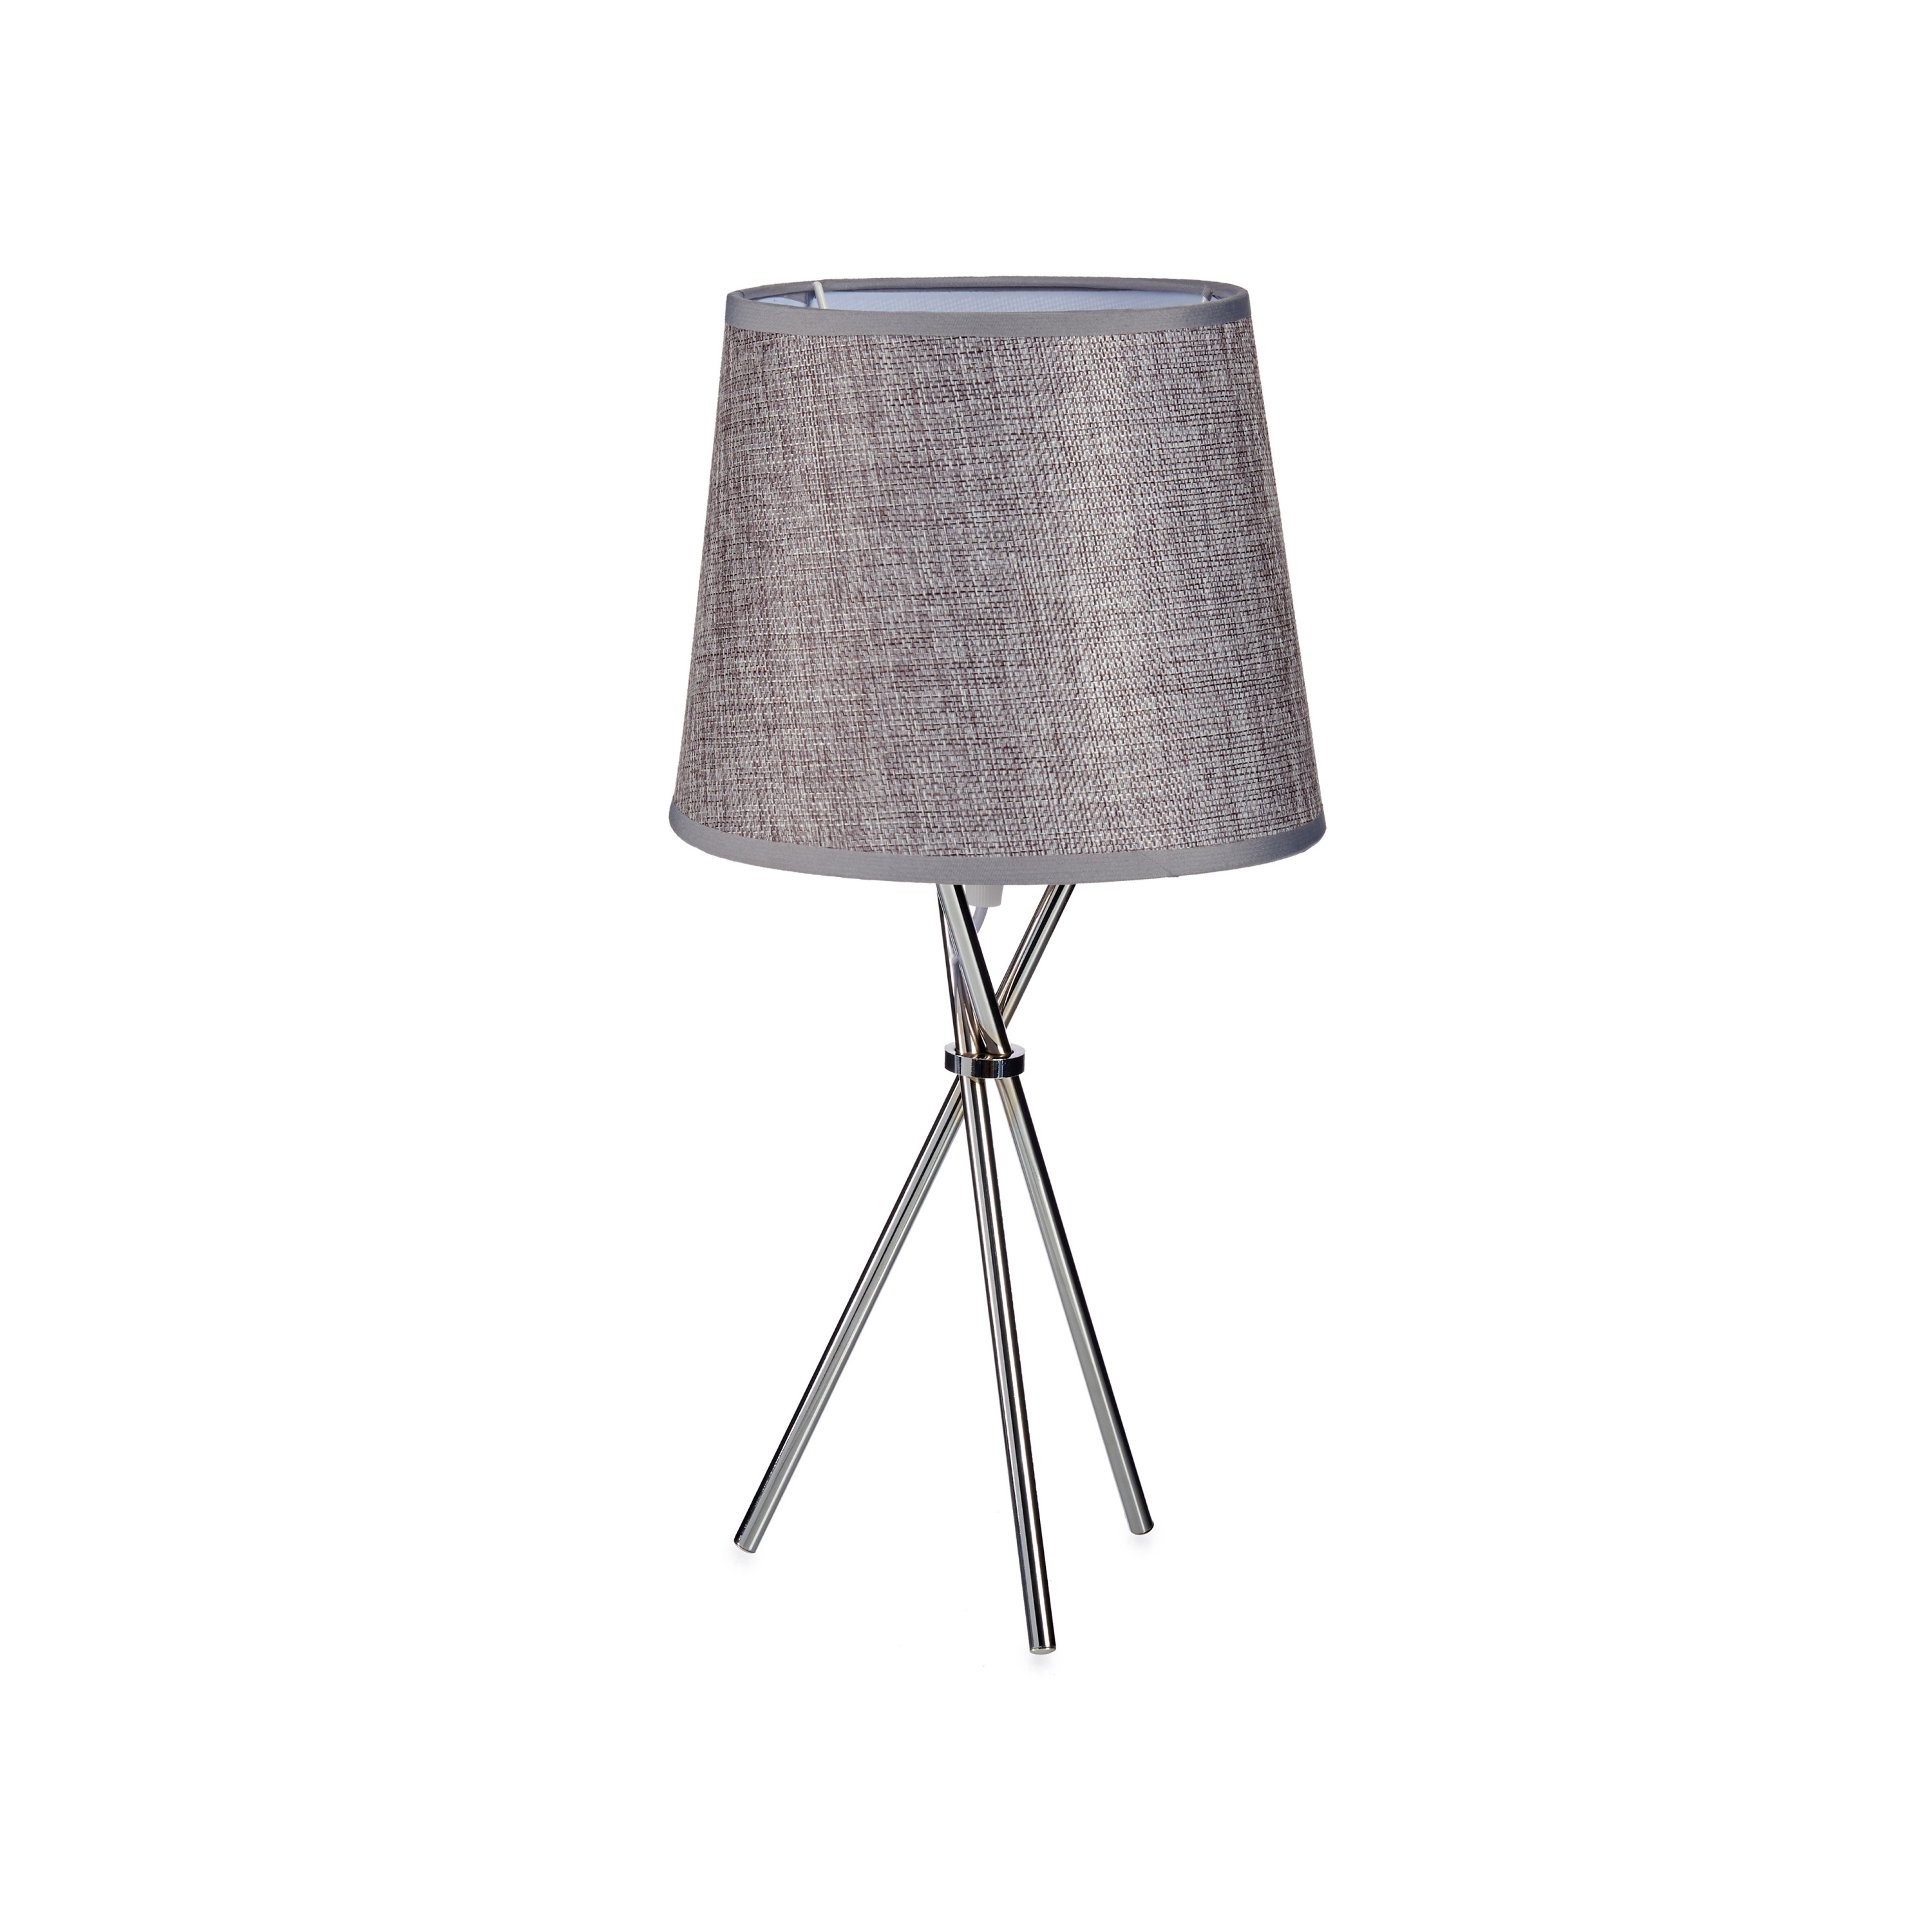 Design tafellamp-schemerlampje zilvergrijze kap en stalen poten 38 cm